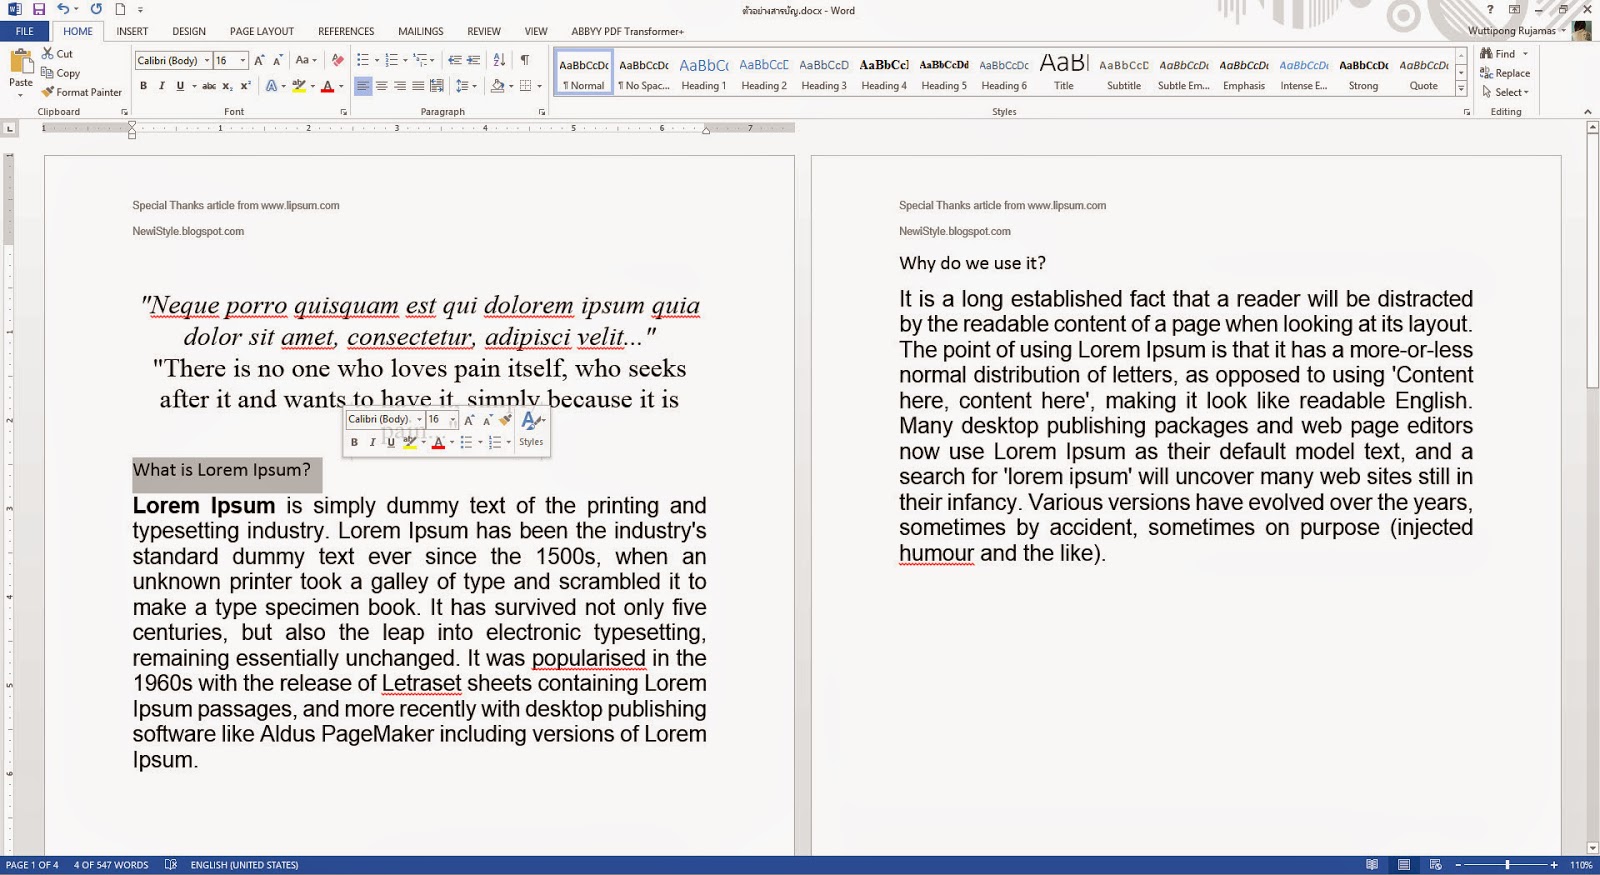 Microsoft Office Word - ทำการคลุมดำหัวข้อของเรากัน เพื่ออะไรน่ะหรอ ดูรูปต่อไปสิ